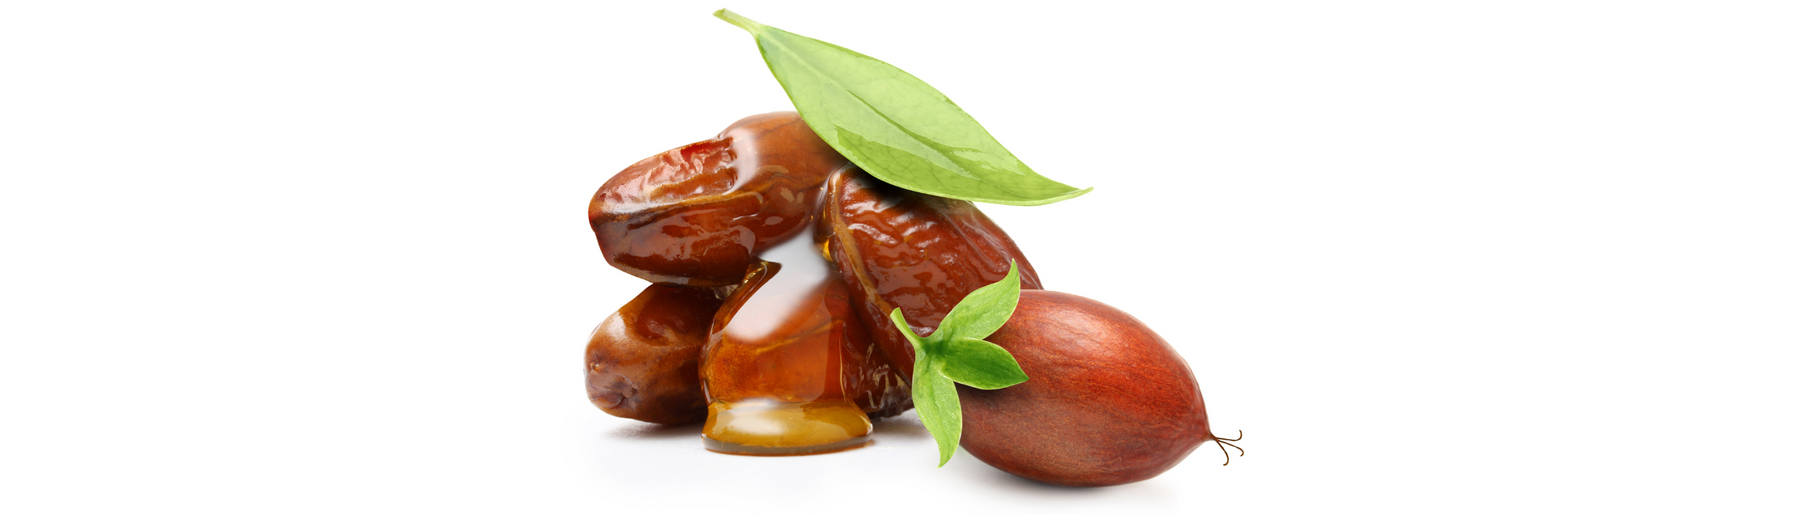 Jojoba nuts are harvested for jojoba oil